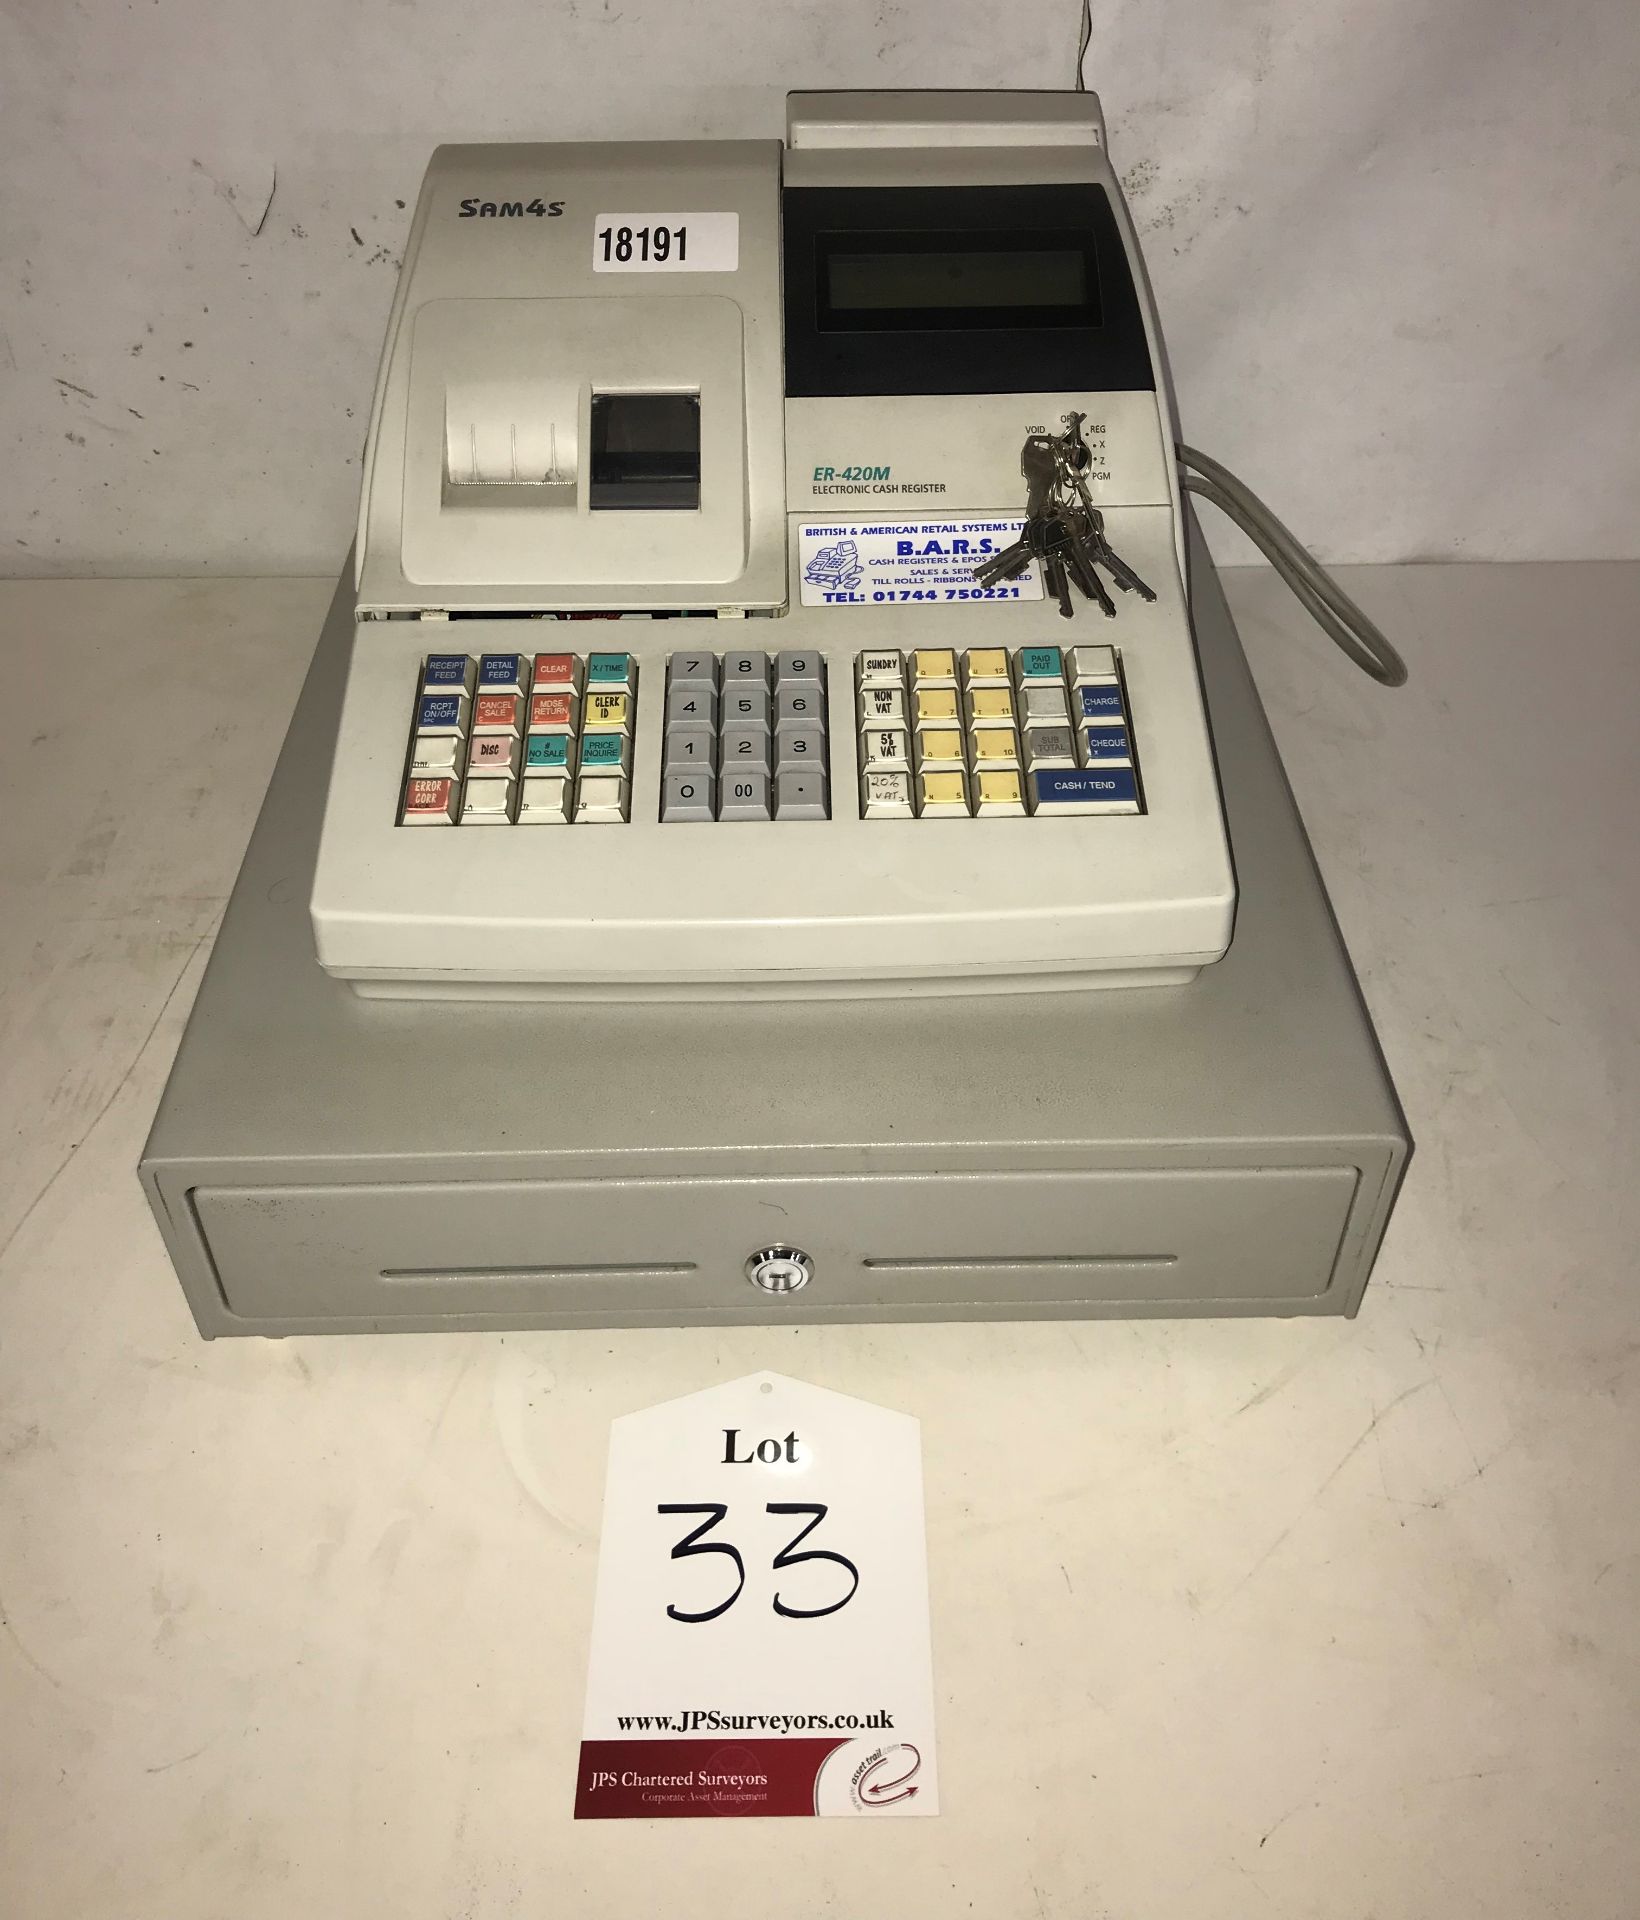 Sam4s ER-420M Electronic Cash Register